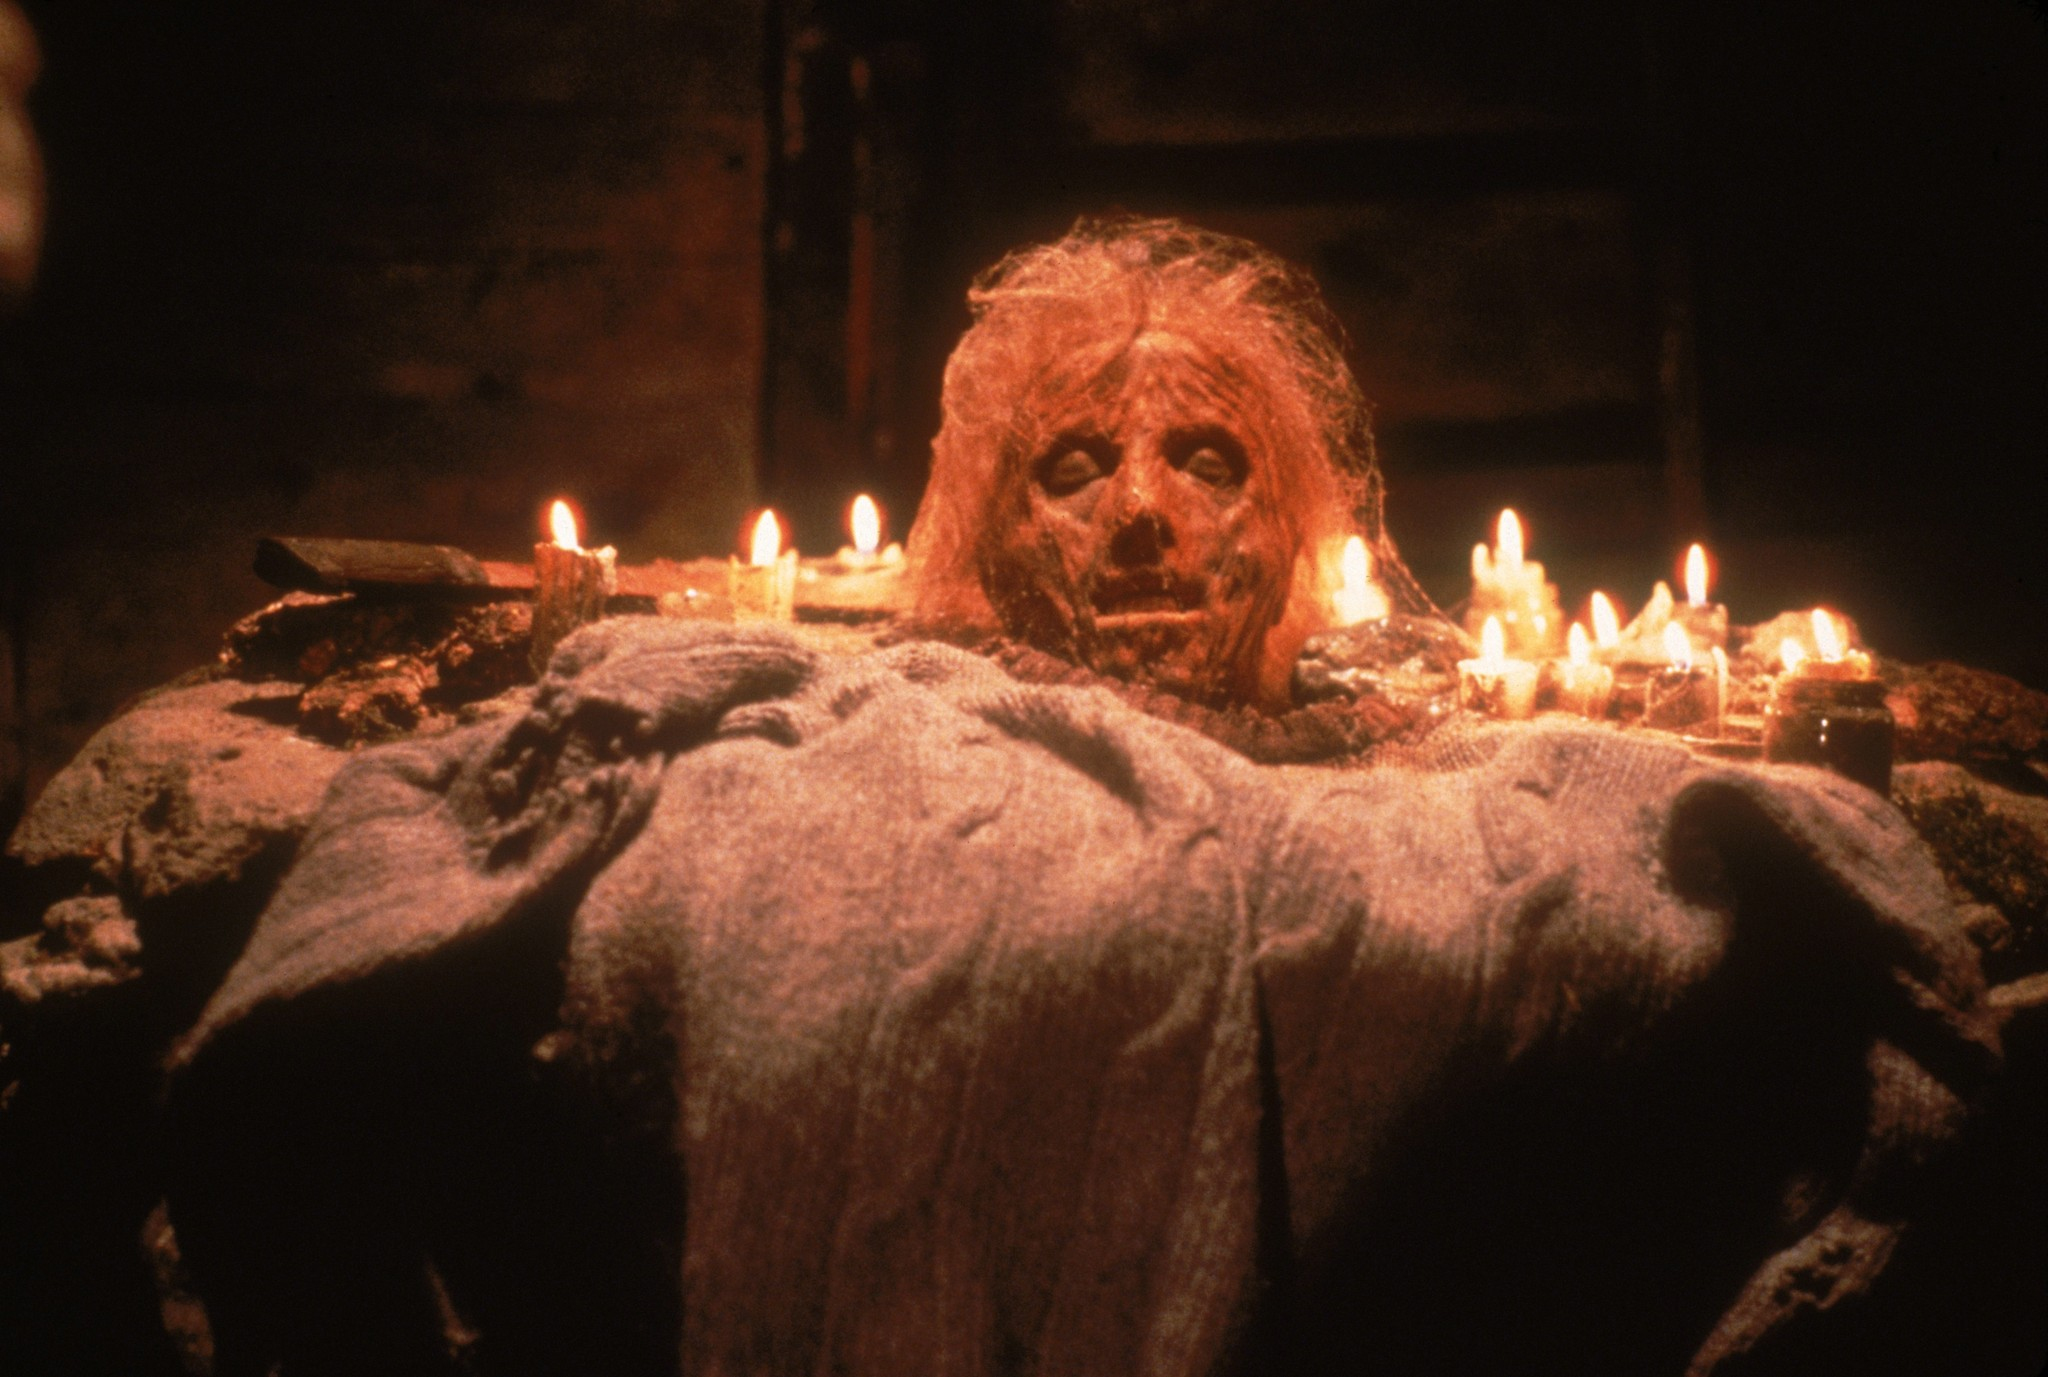 Friday The 13th Part 2: Jason (1981)